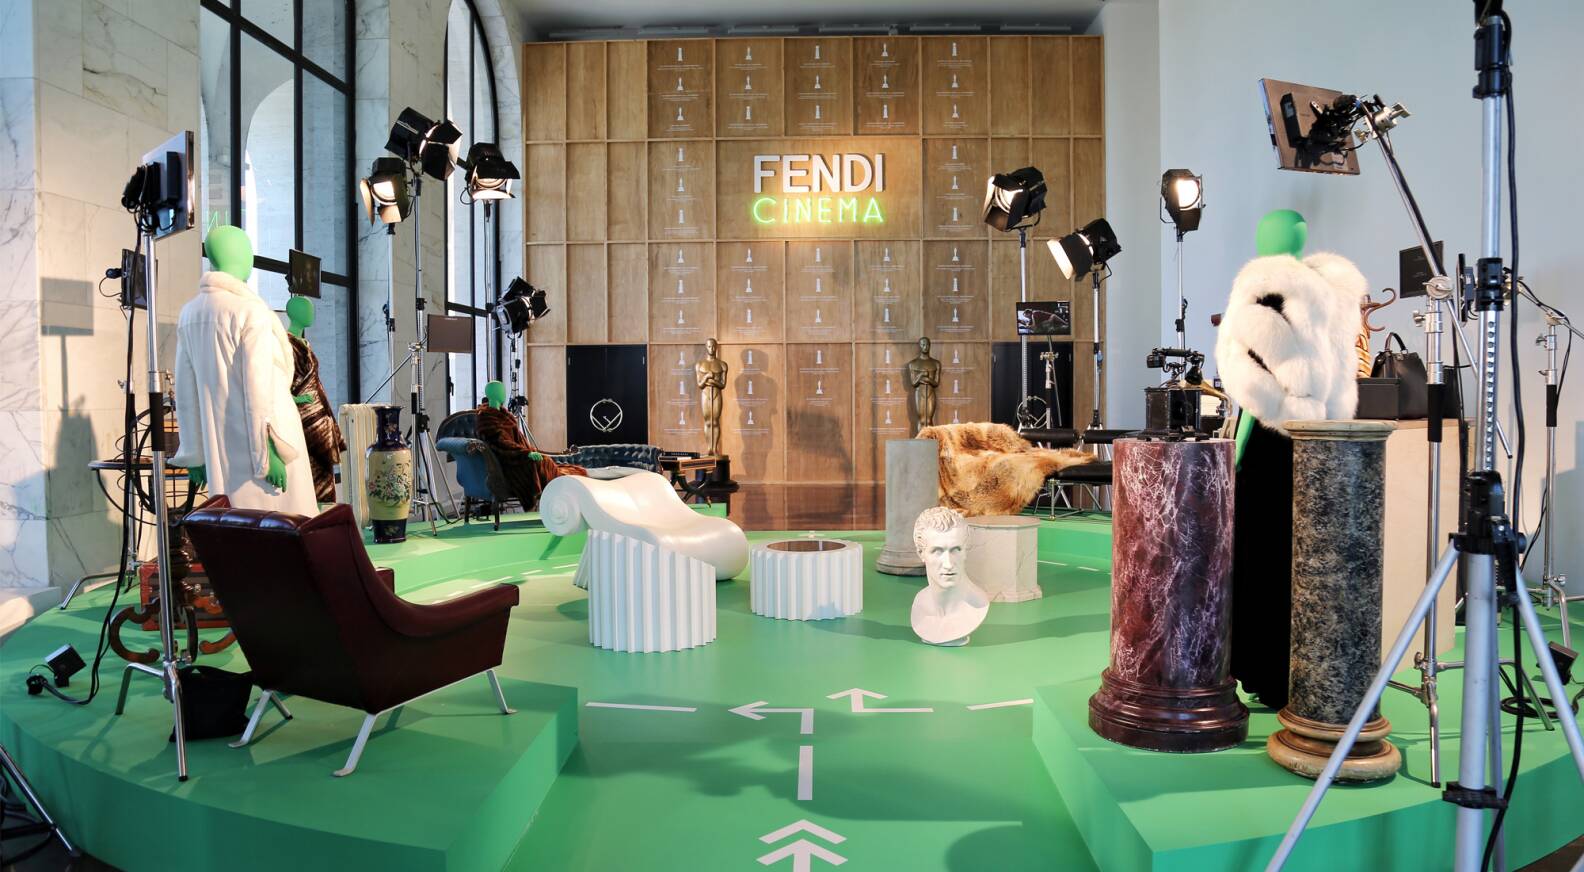 Fendi Studios exhibition celebrates close bonds between Fendi and